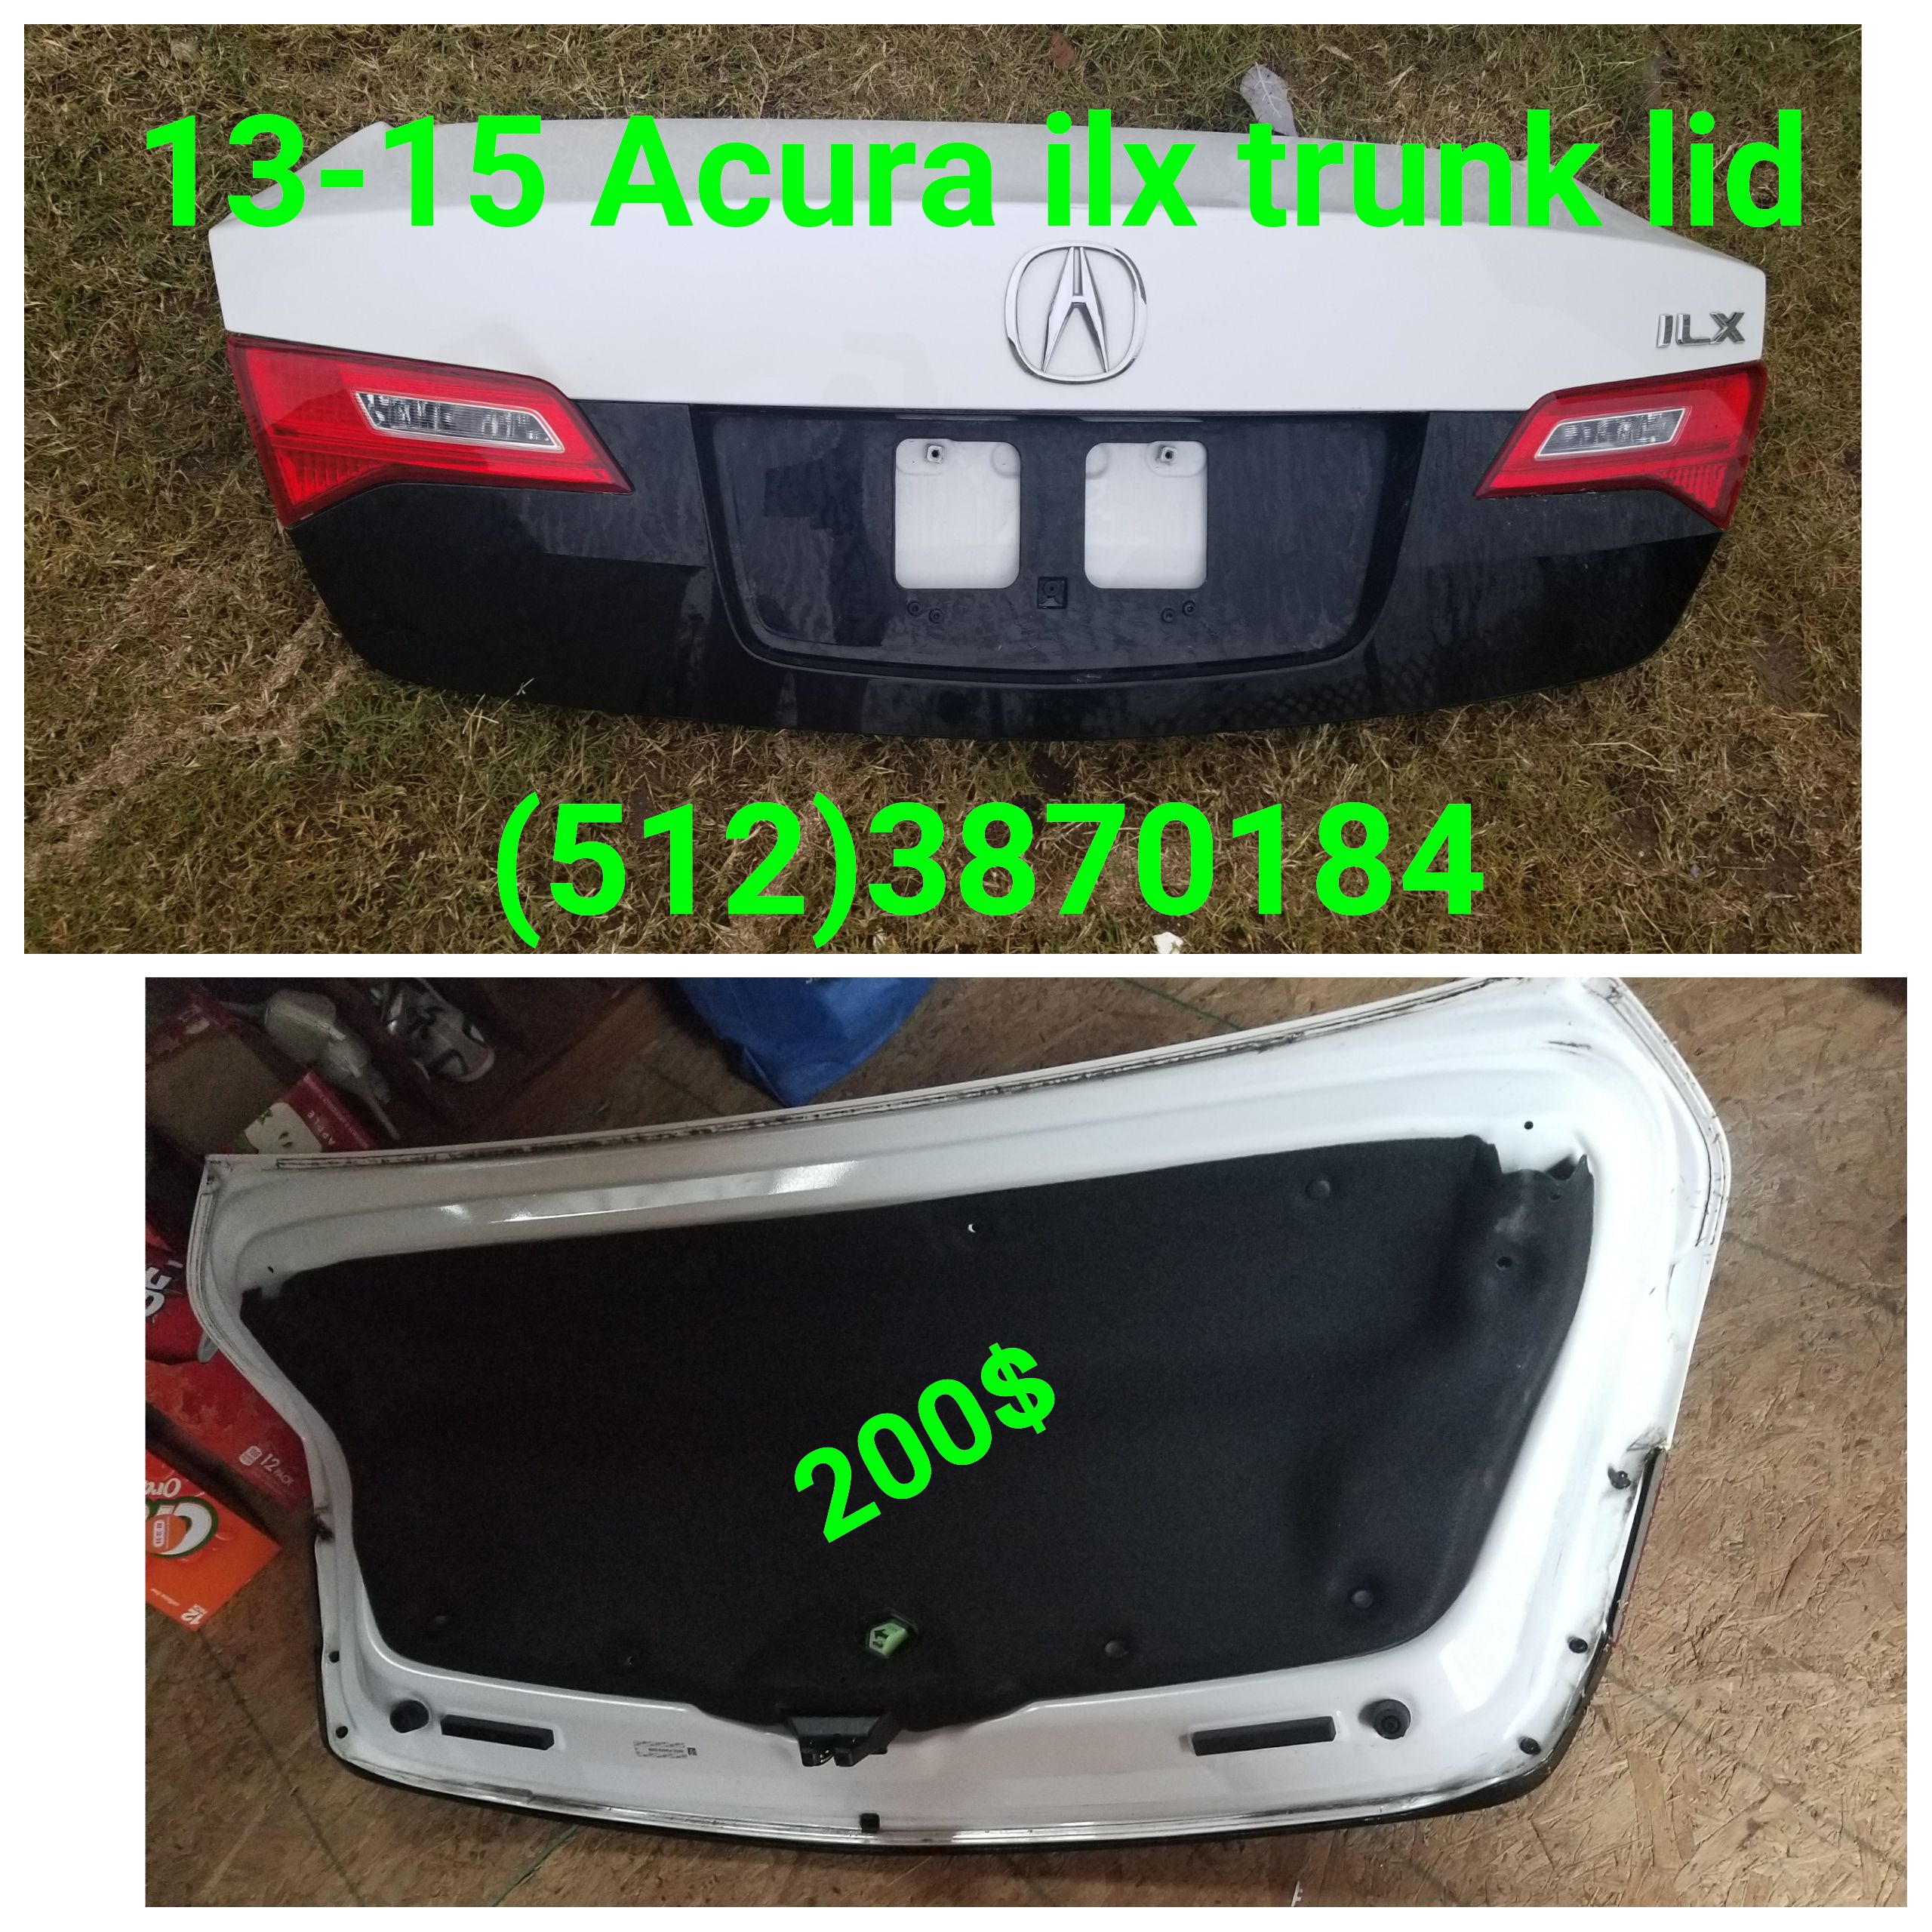 2013 2014 2015 acura ilx trunk lid